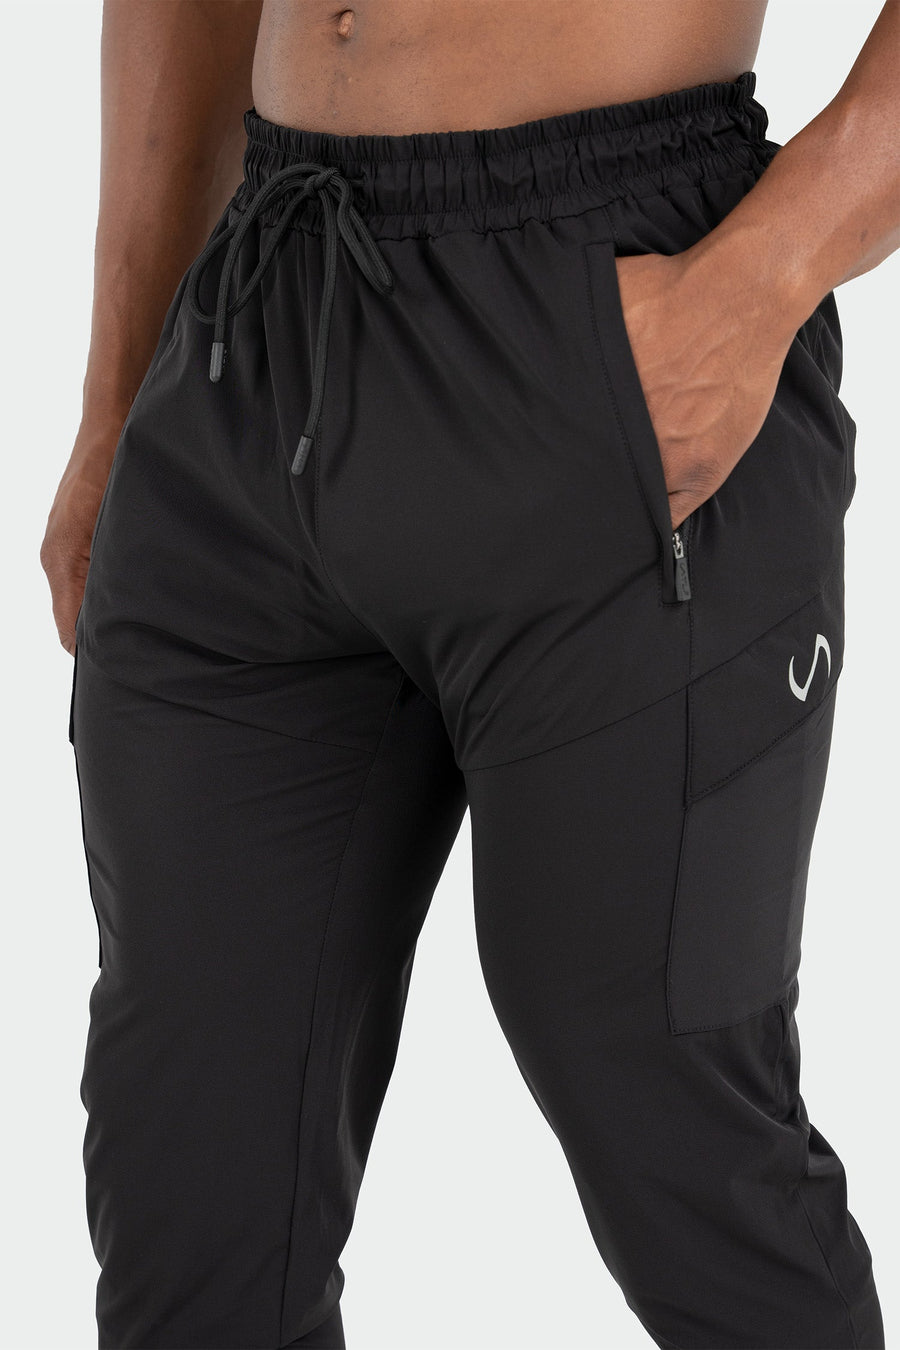 Men's Cotton Fleece Cargo Jogger Pants - All In Motion™ Black L